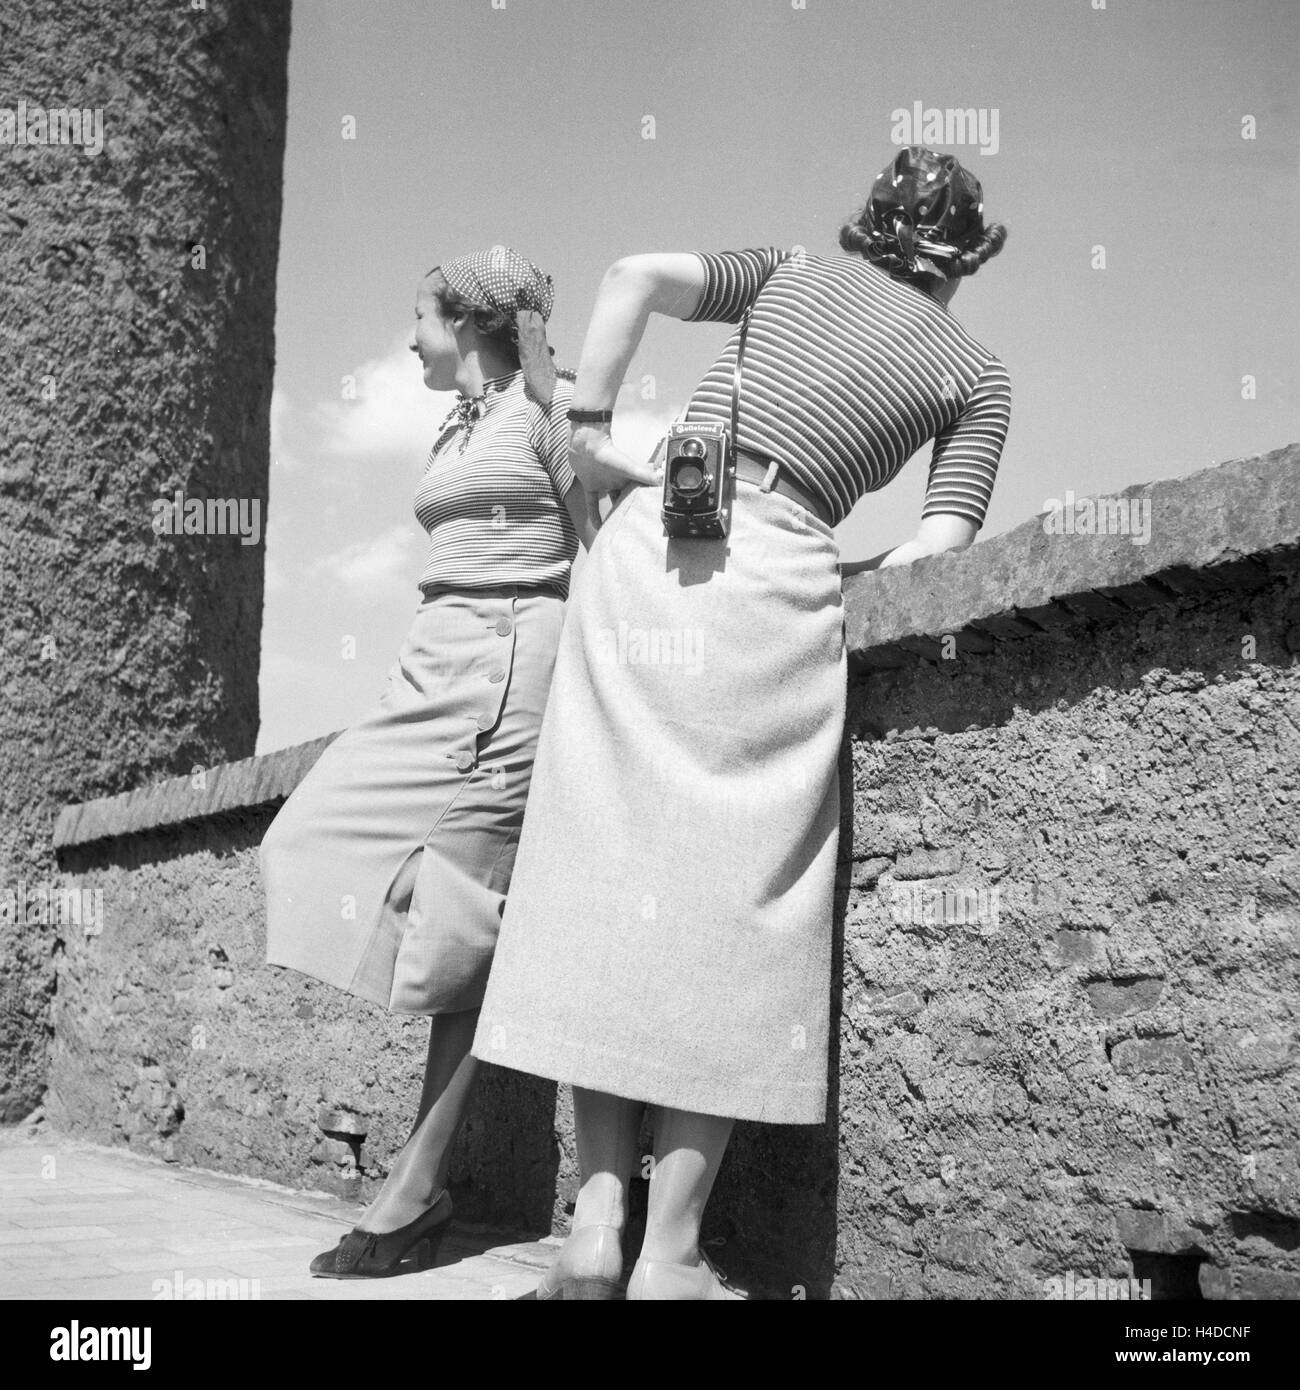 Zwei Frauen mit der Kamera auf Deutschland, Besichtigungstour er 1930 Jahr. Deux femmes avec un appareil photo sur une visite guidée, l'Allemagne des années 1930. Banque D'Images